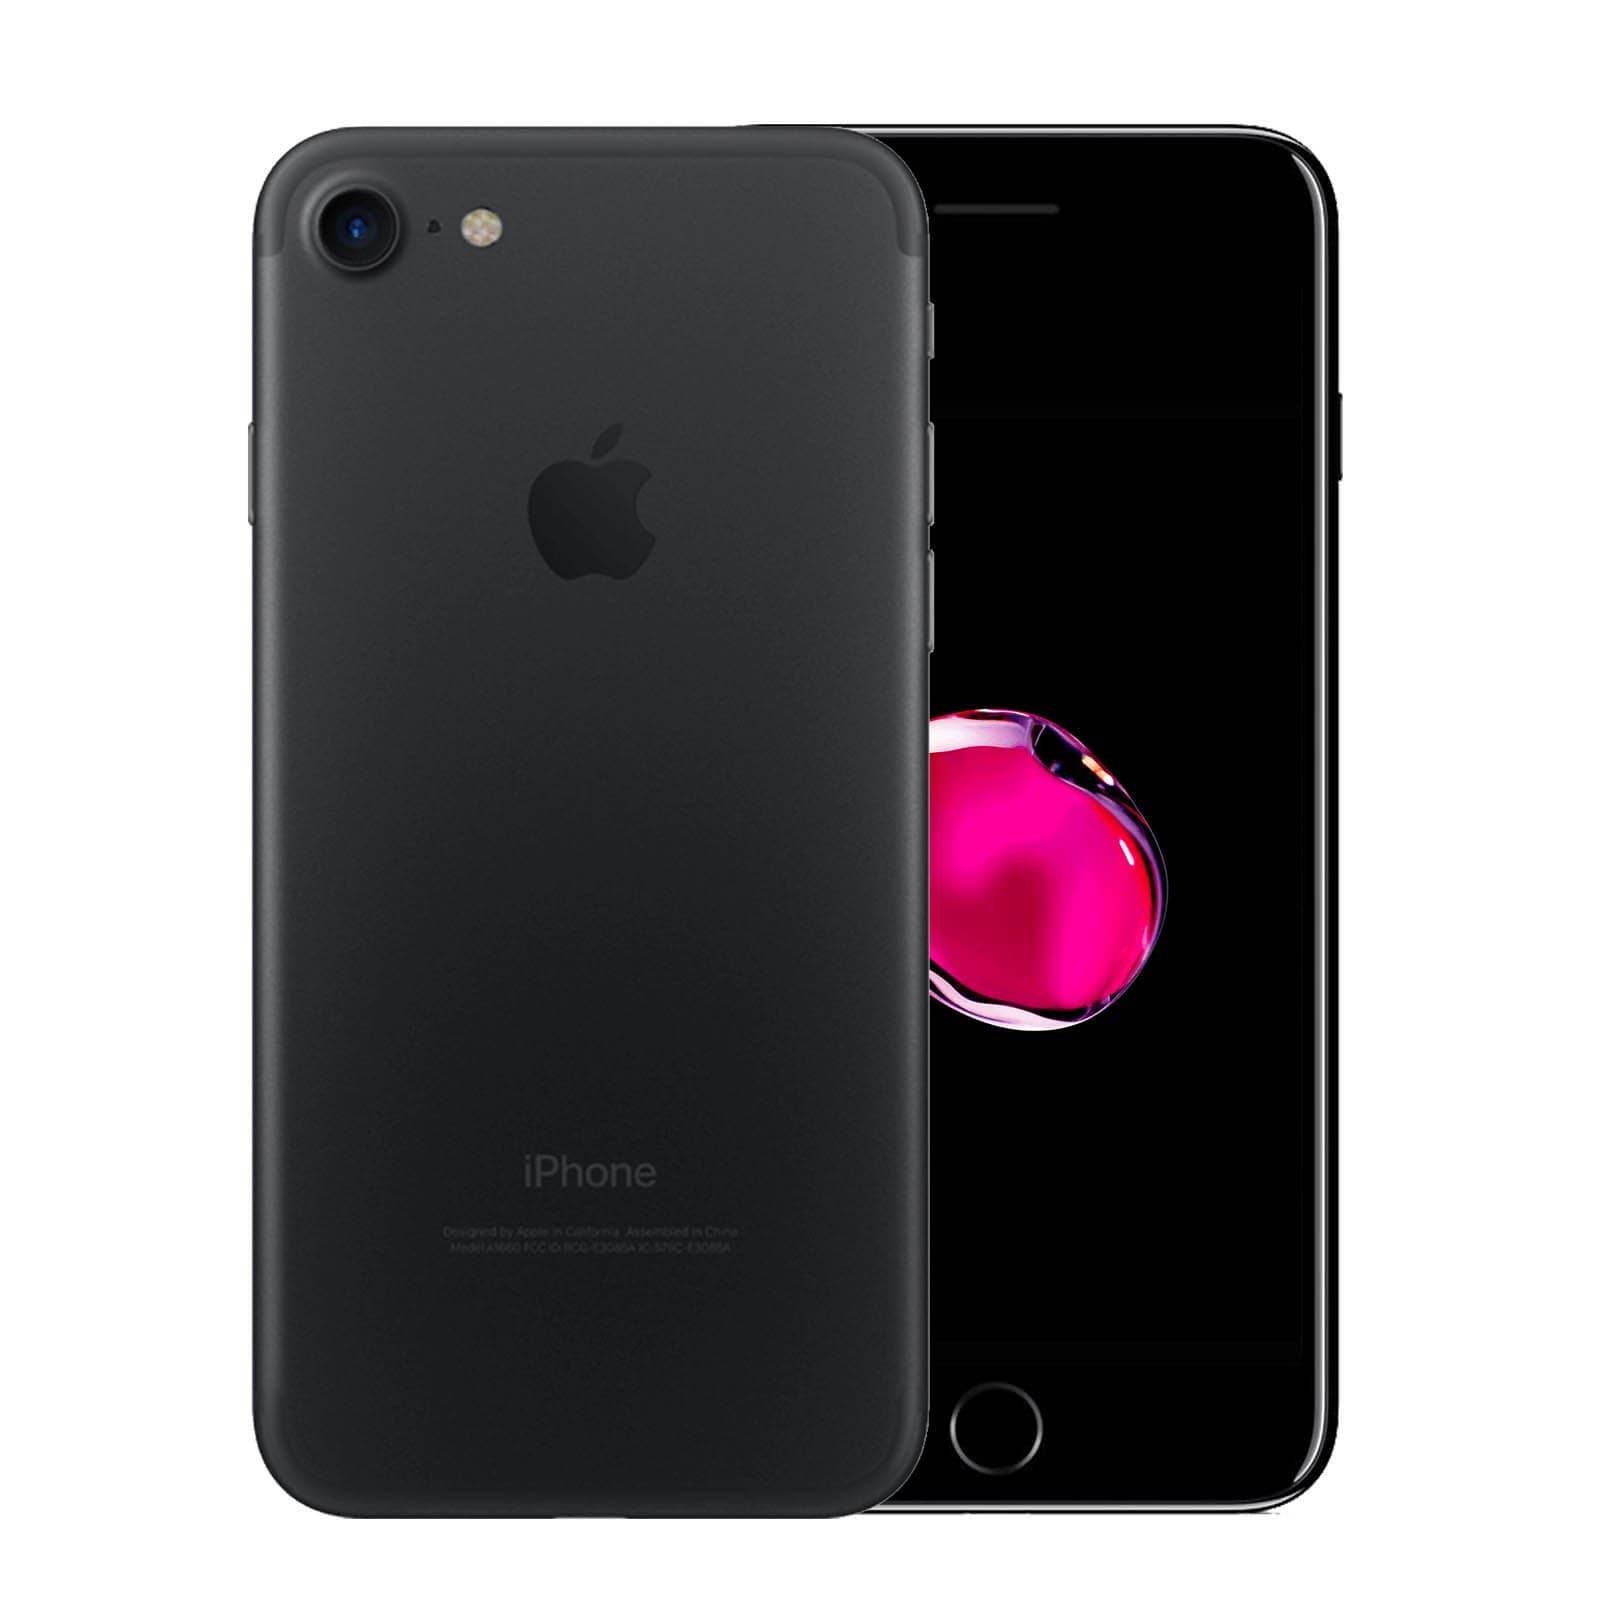 Apple iPhone 7 128GB Black Fair - Unlocked 128GB Black Fair